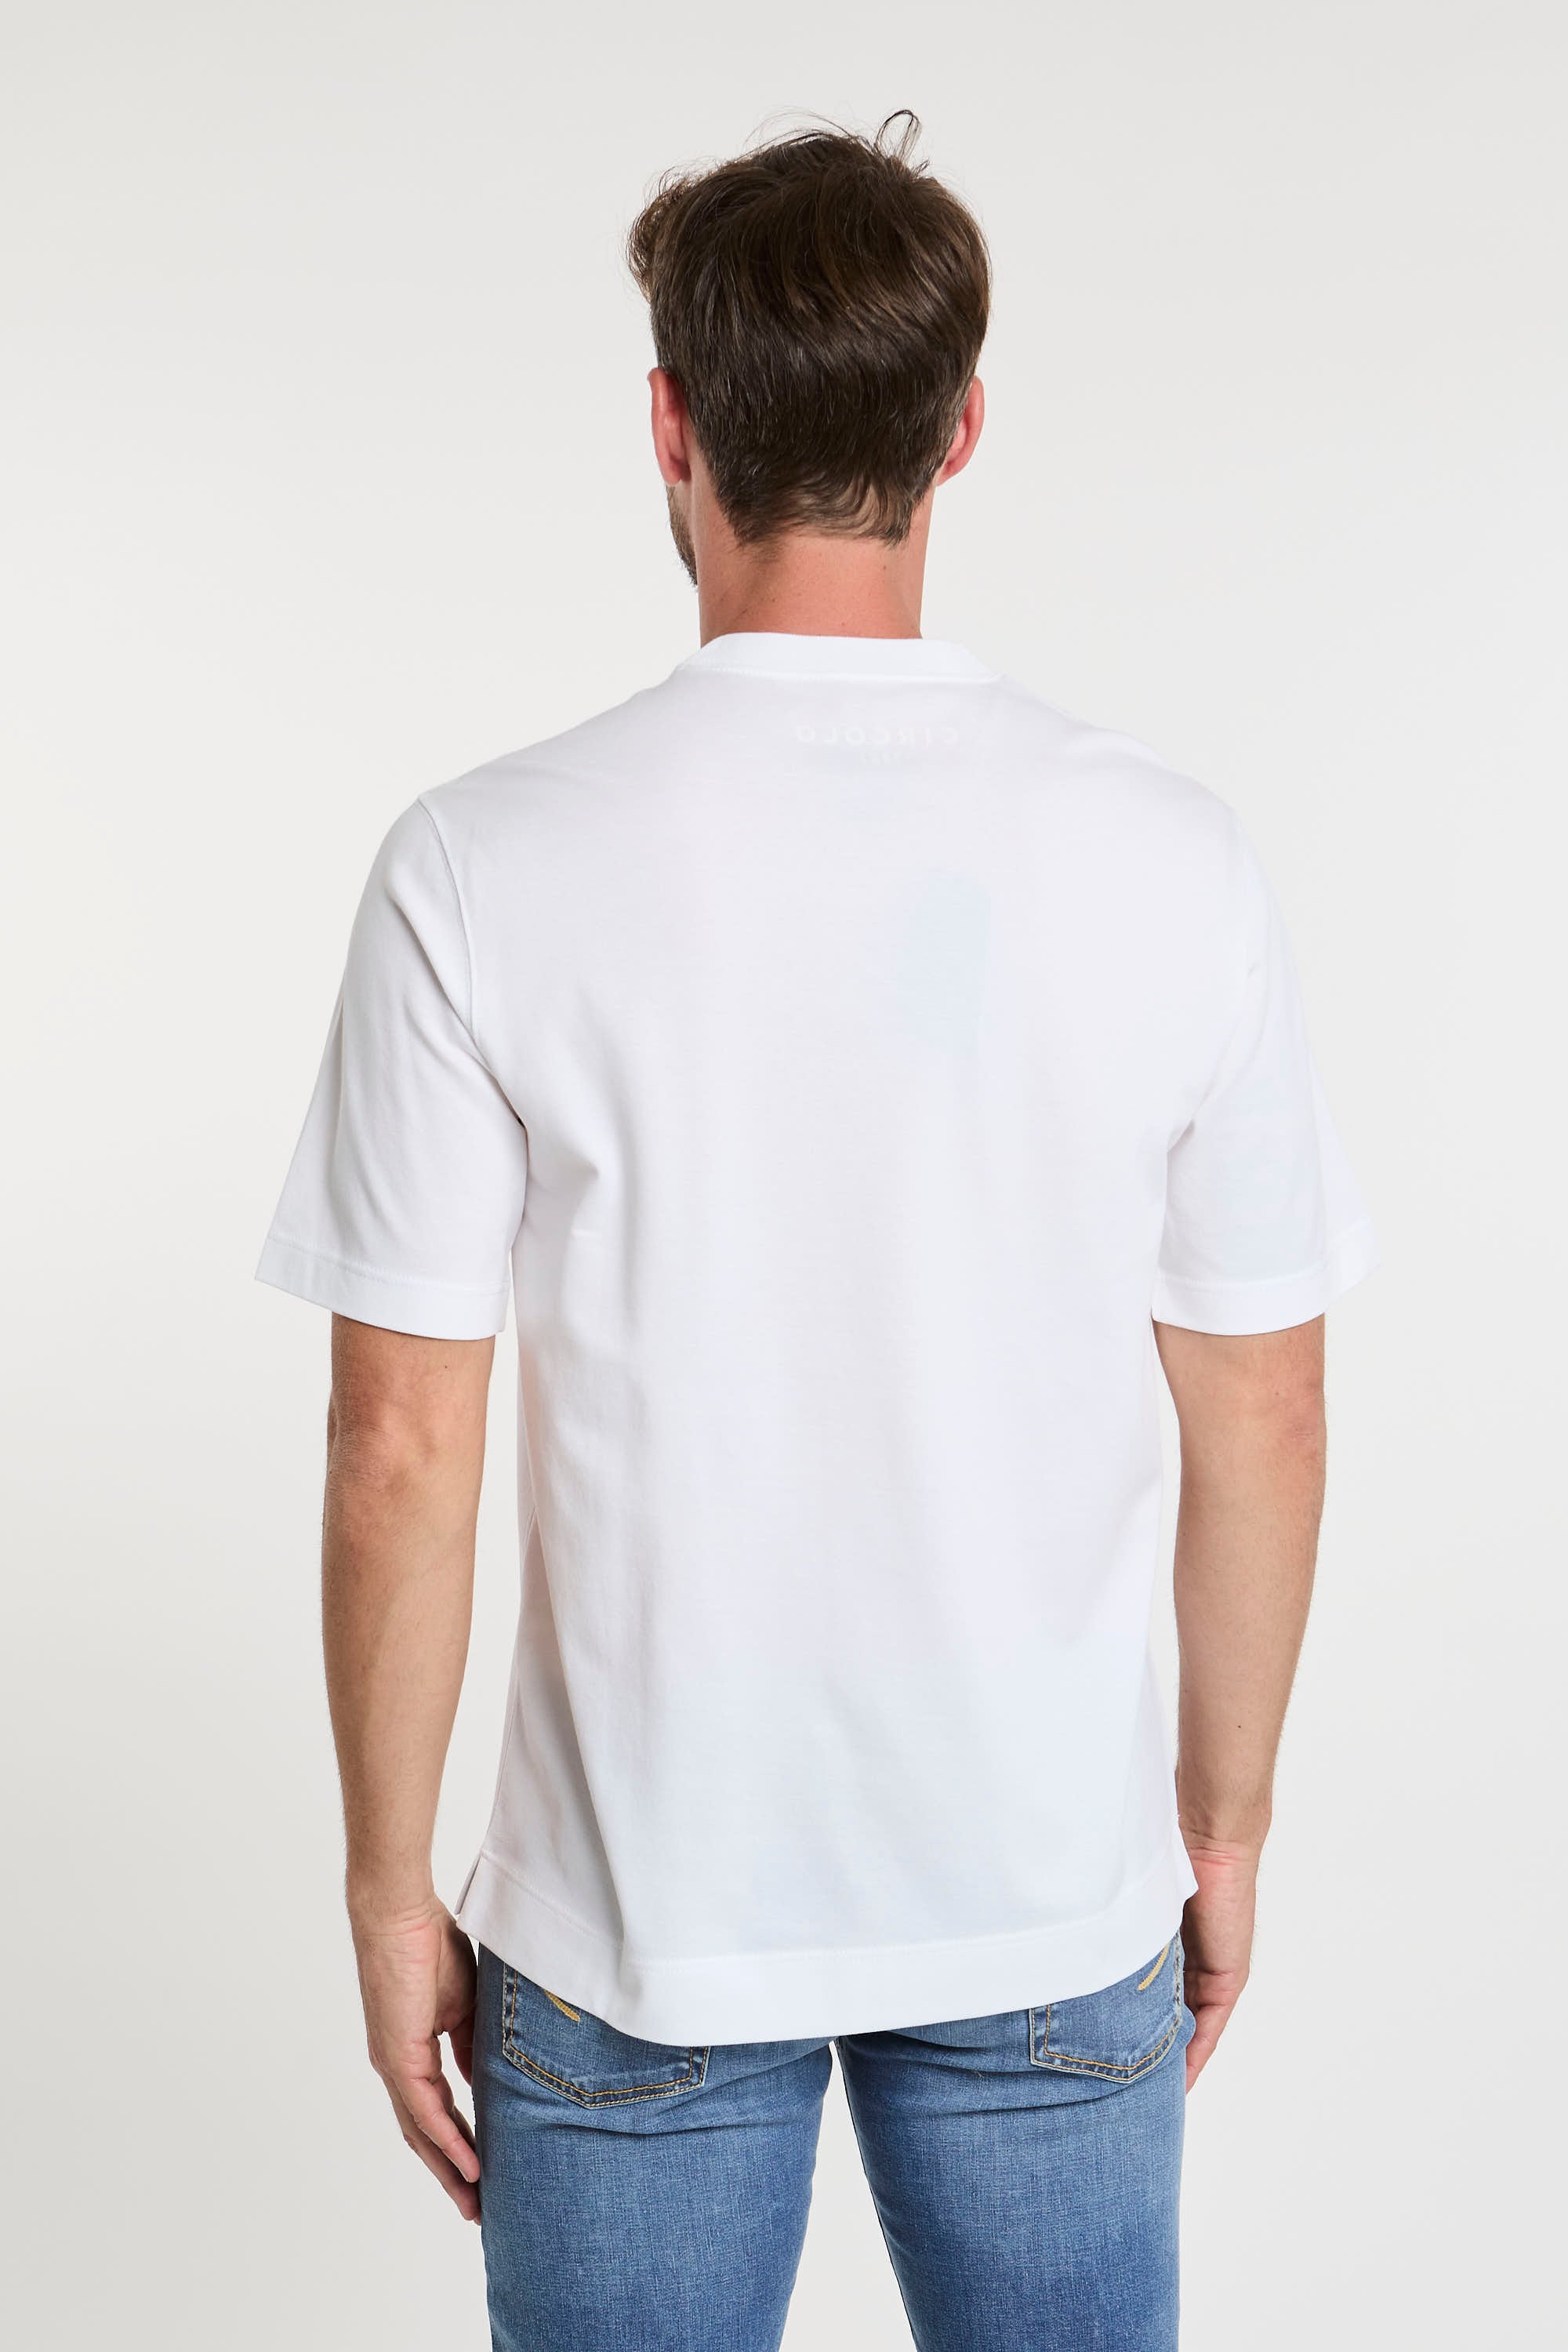 Circolo 1901 T-Shirt Baumwolle Weiß 6505-6